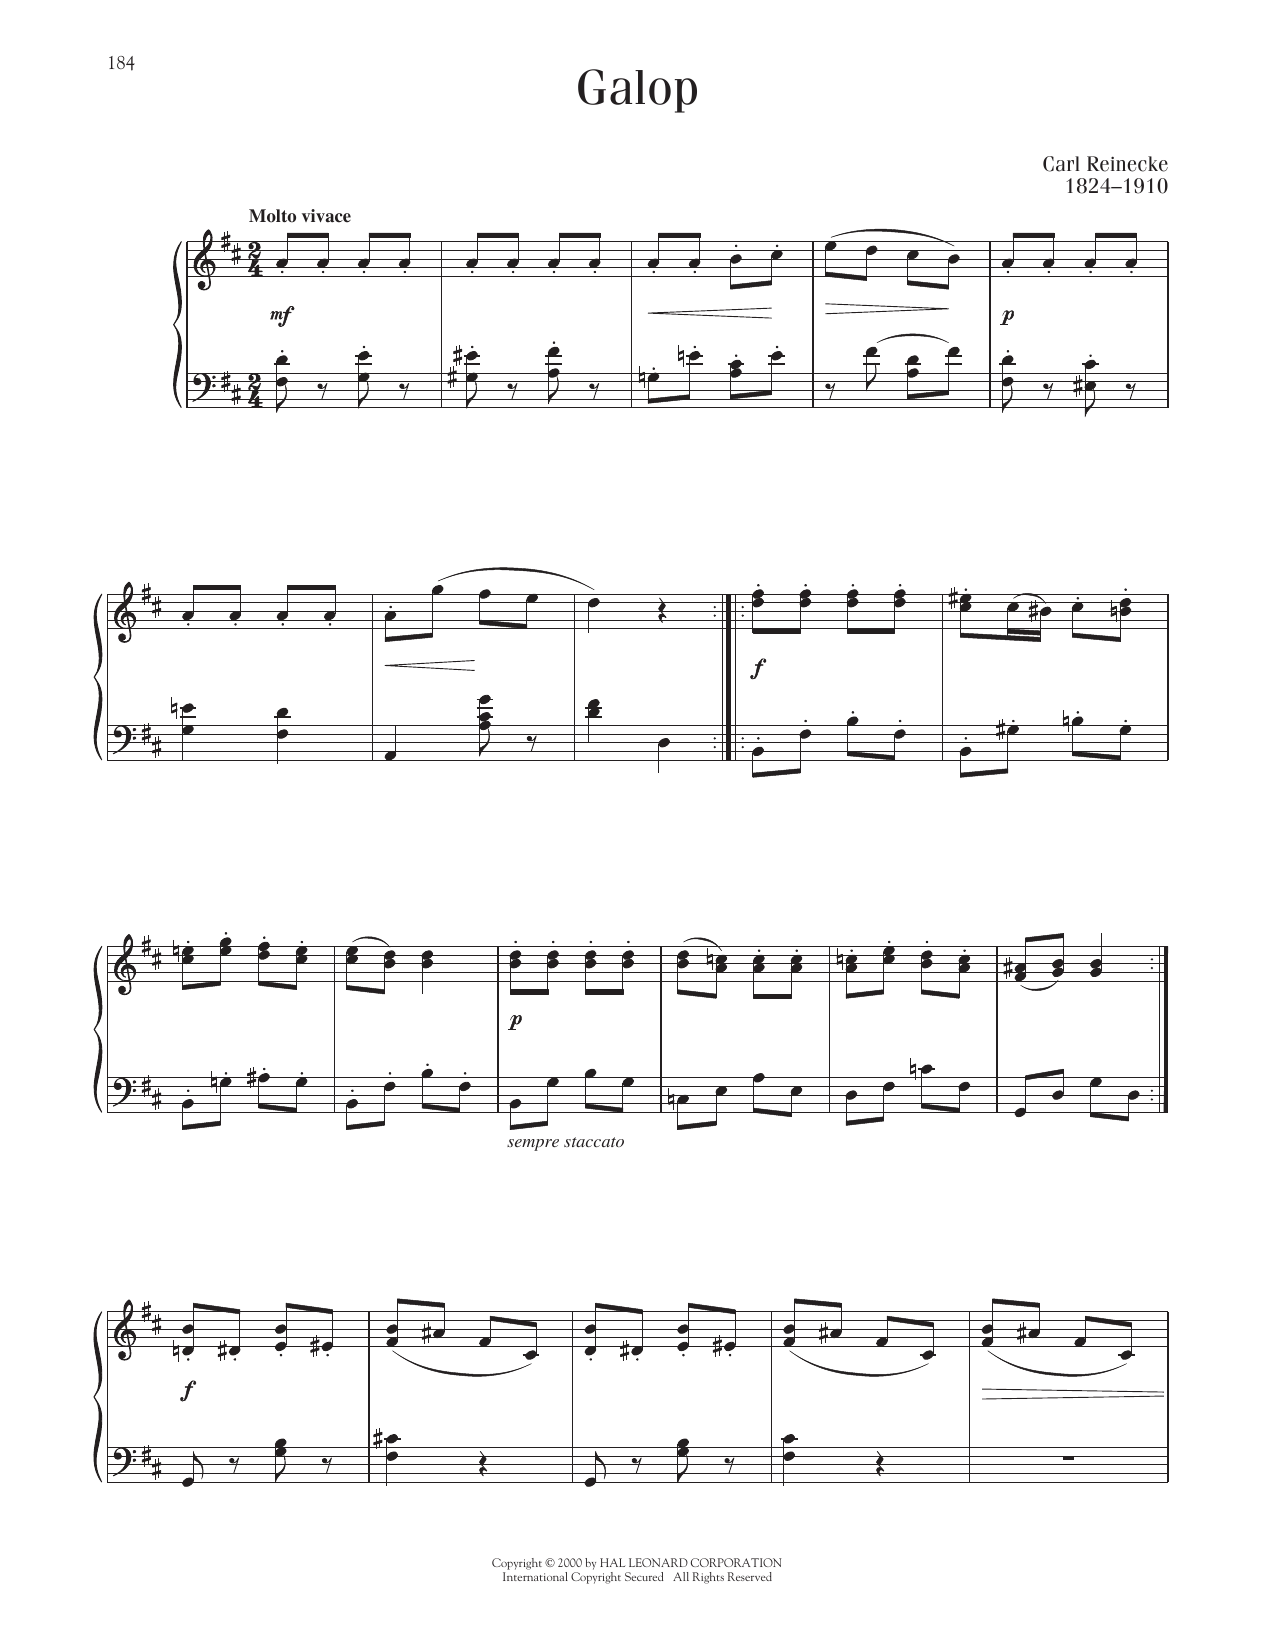 Carl Reinecke Galop sheet music notes printable PDF score